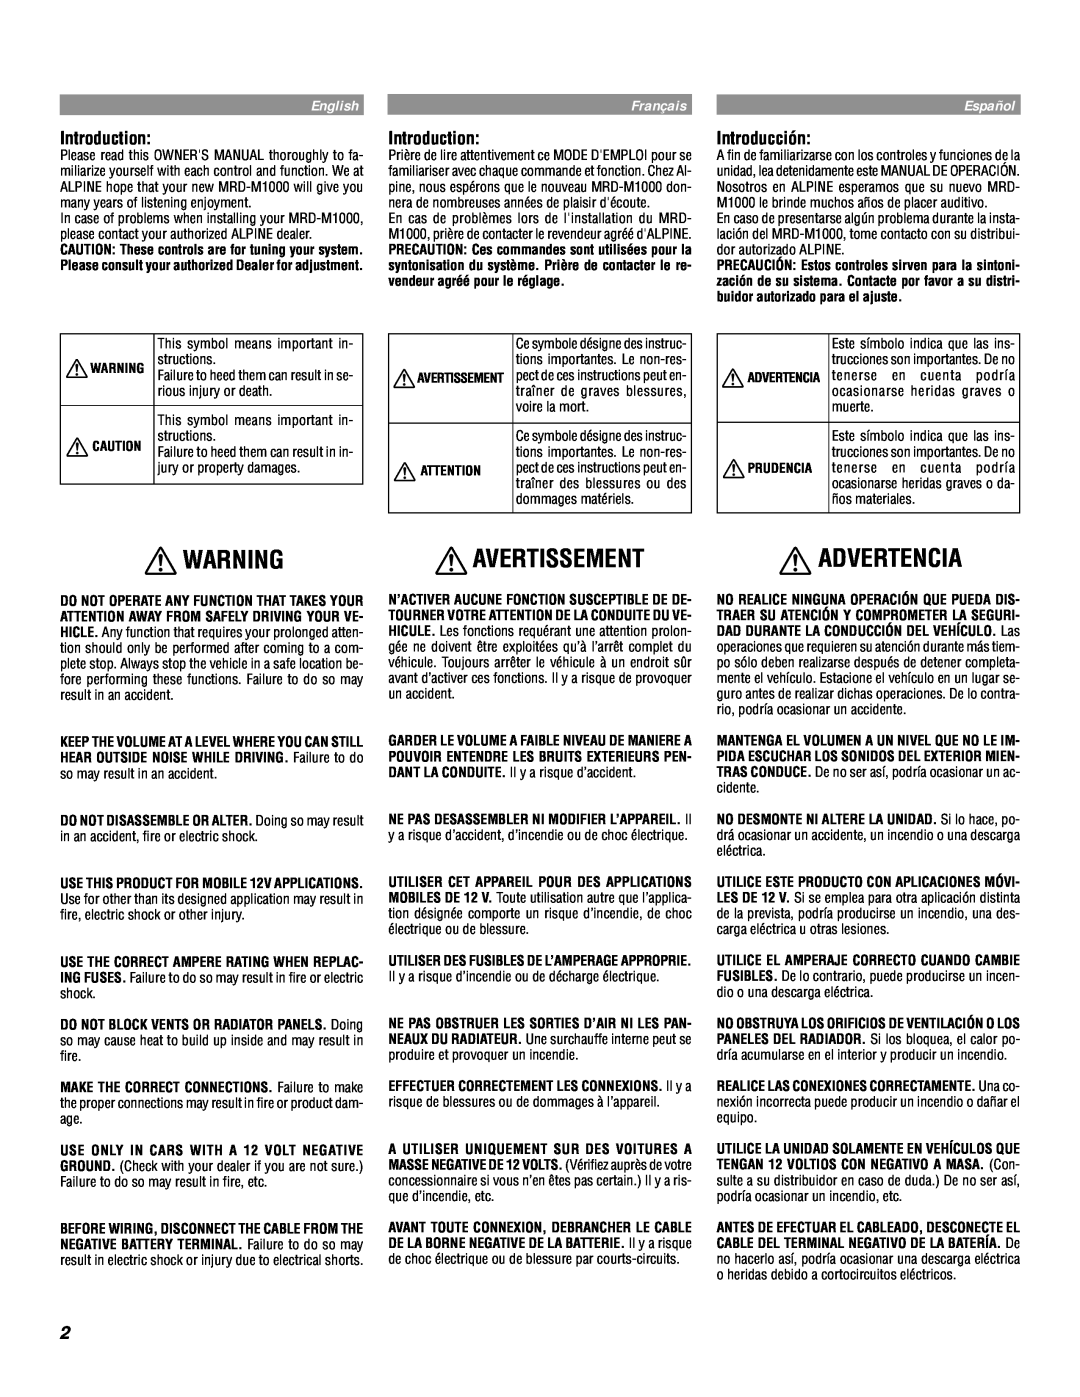 Alpine MRD-M1000 owner manual Avertissement, Advertencia, English, Français, Español 